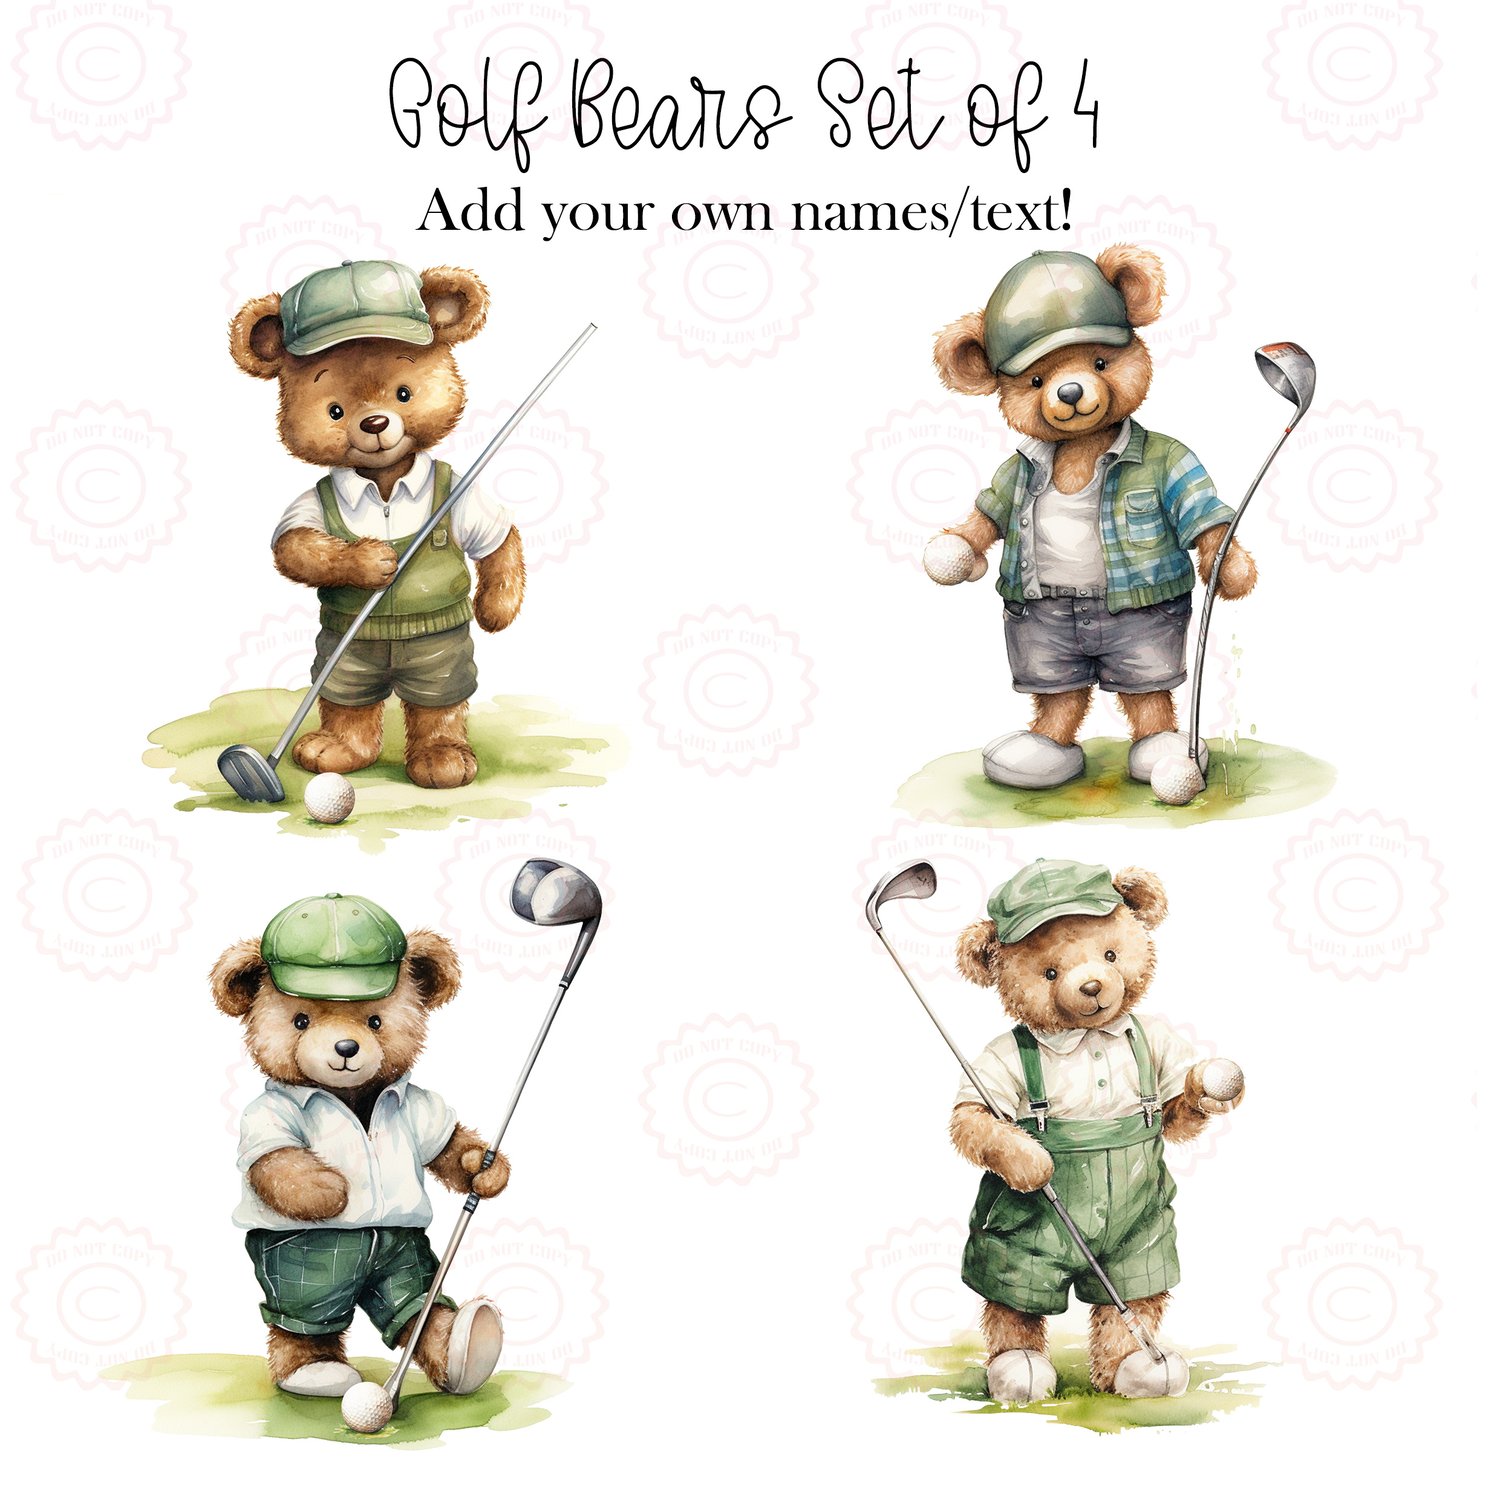 Golf Bears Set of 4